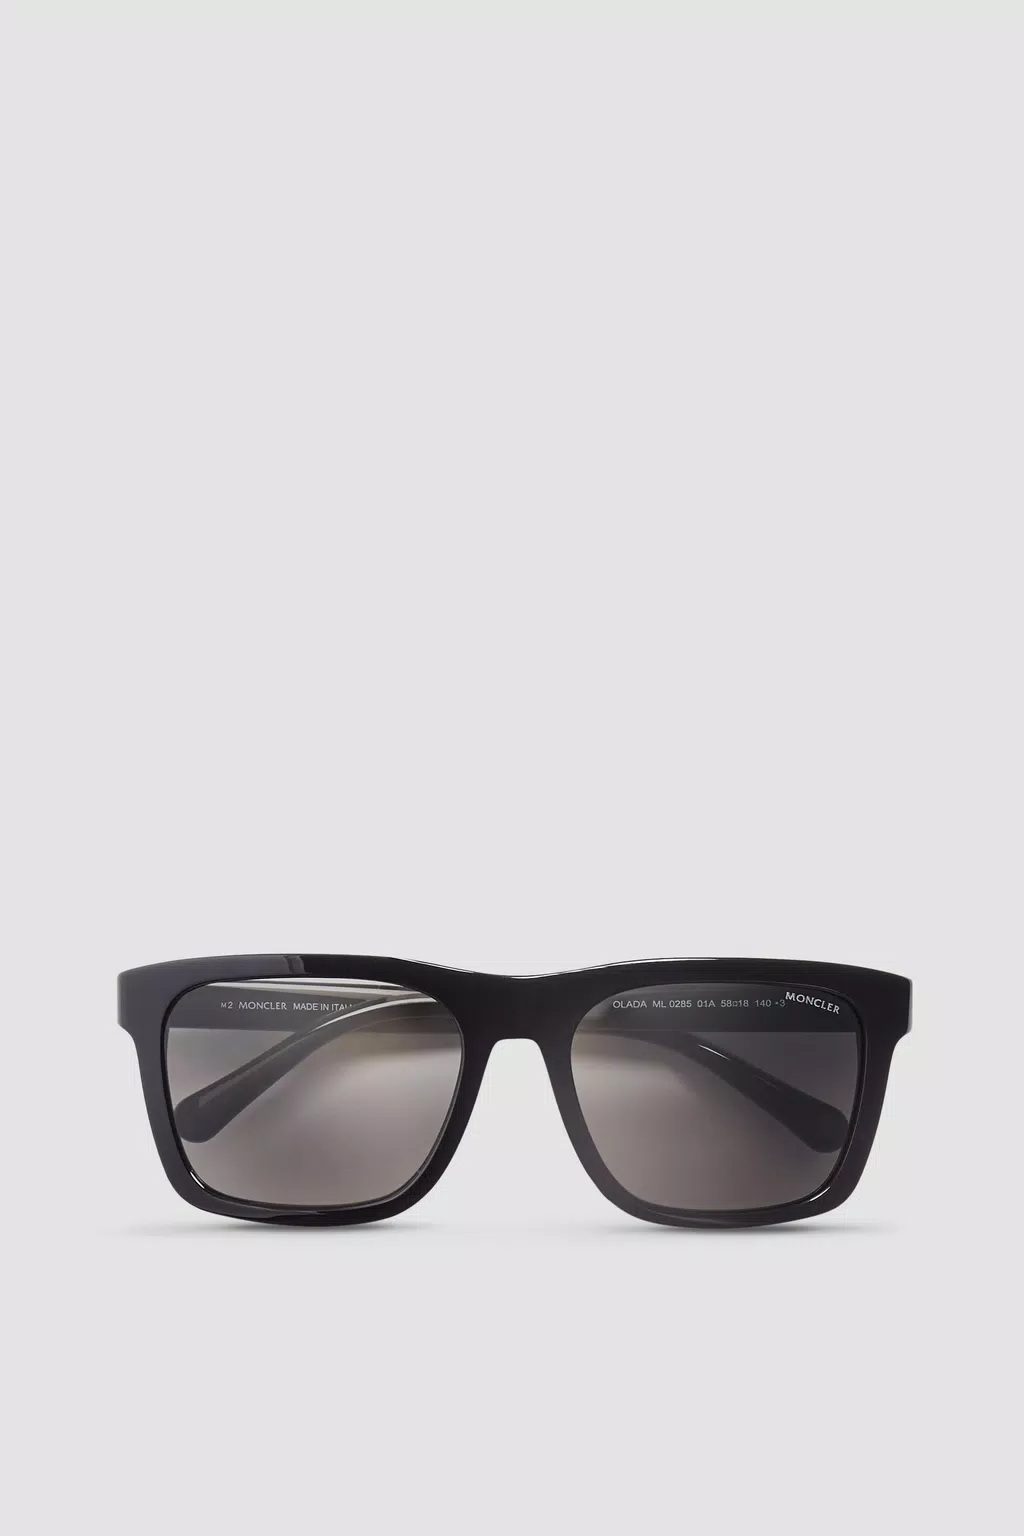 Sunglasses, Shades & Eyewear for Men